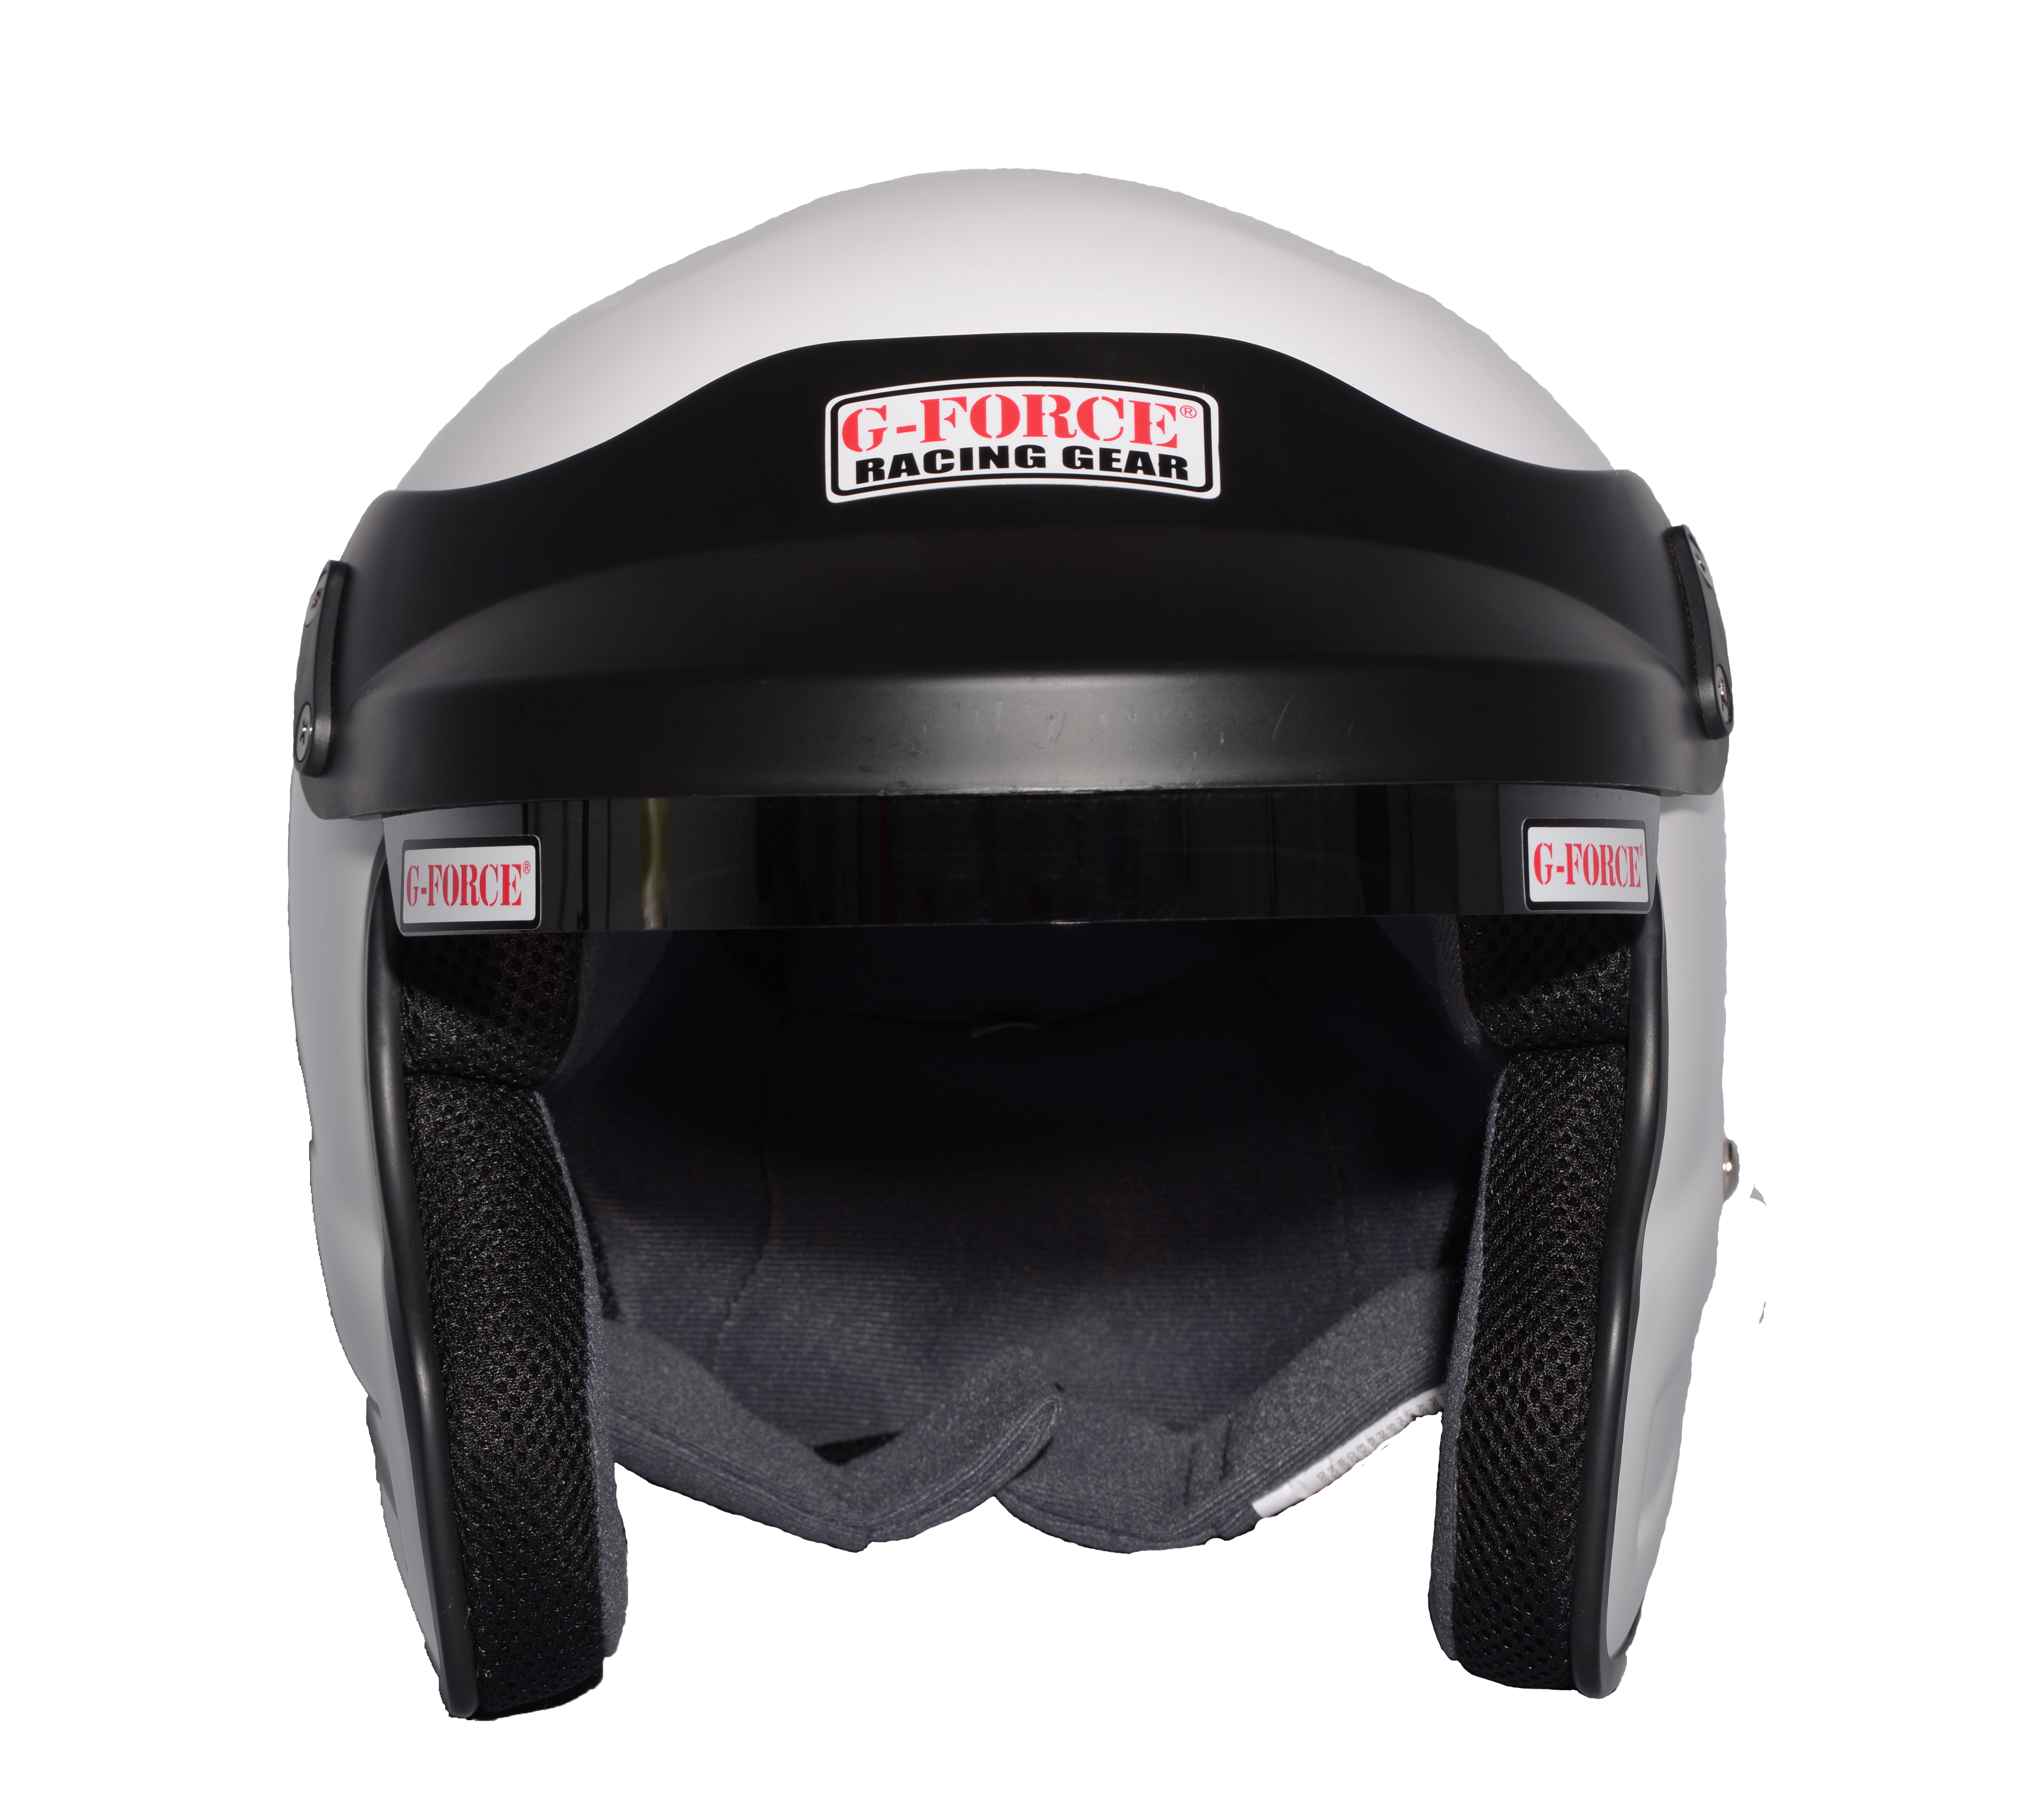 G-Force Racing Gear Helmet, PRO PHENOM SA2010 OPEN FACE MEDIUM WHITE